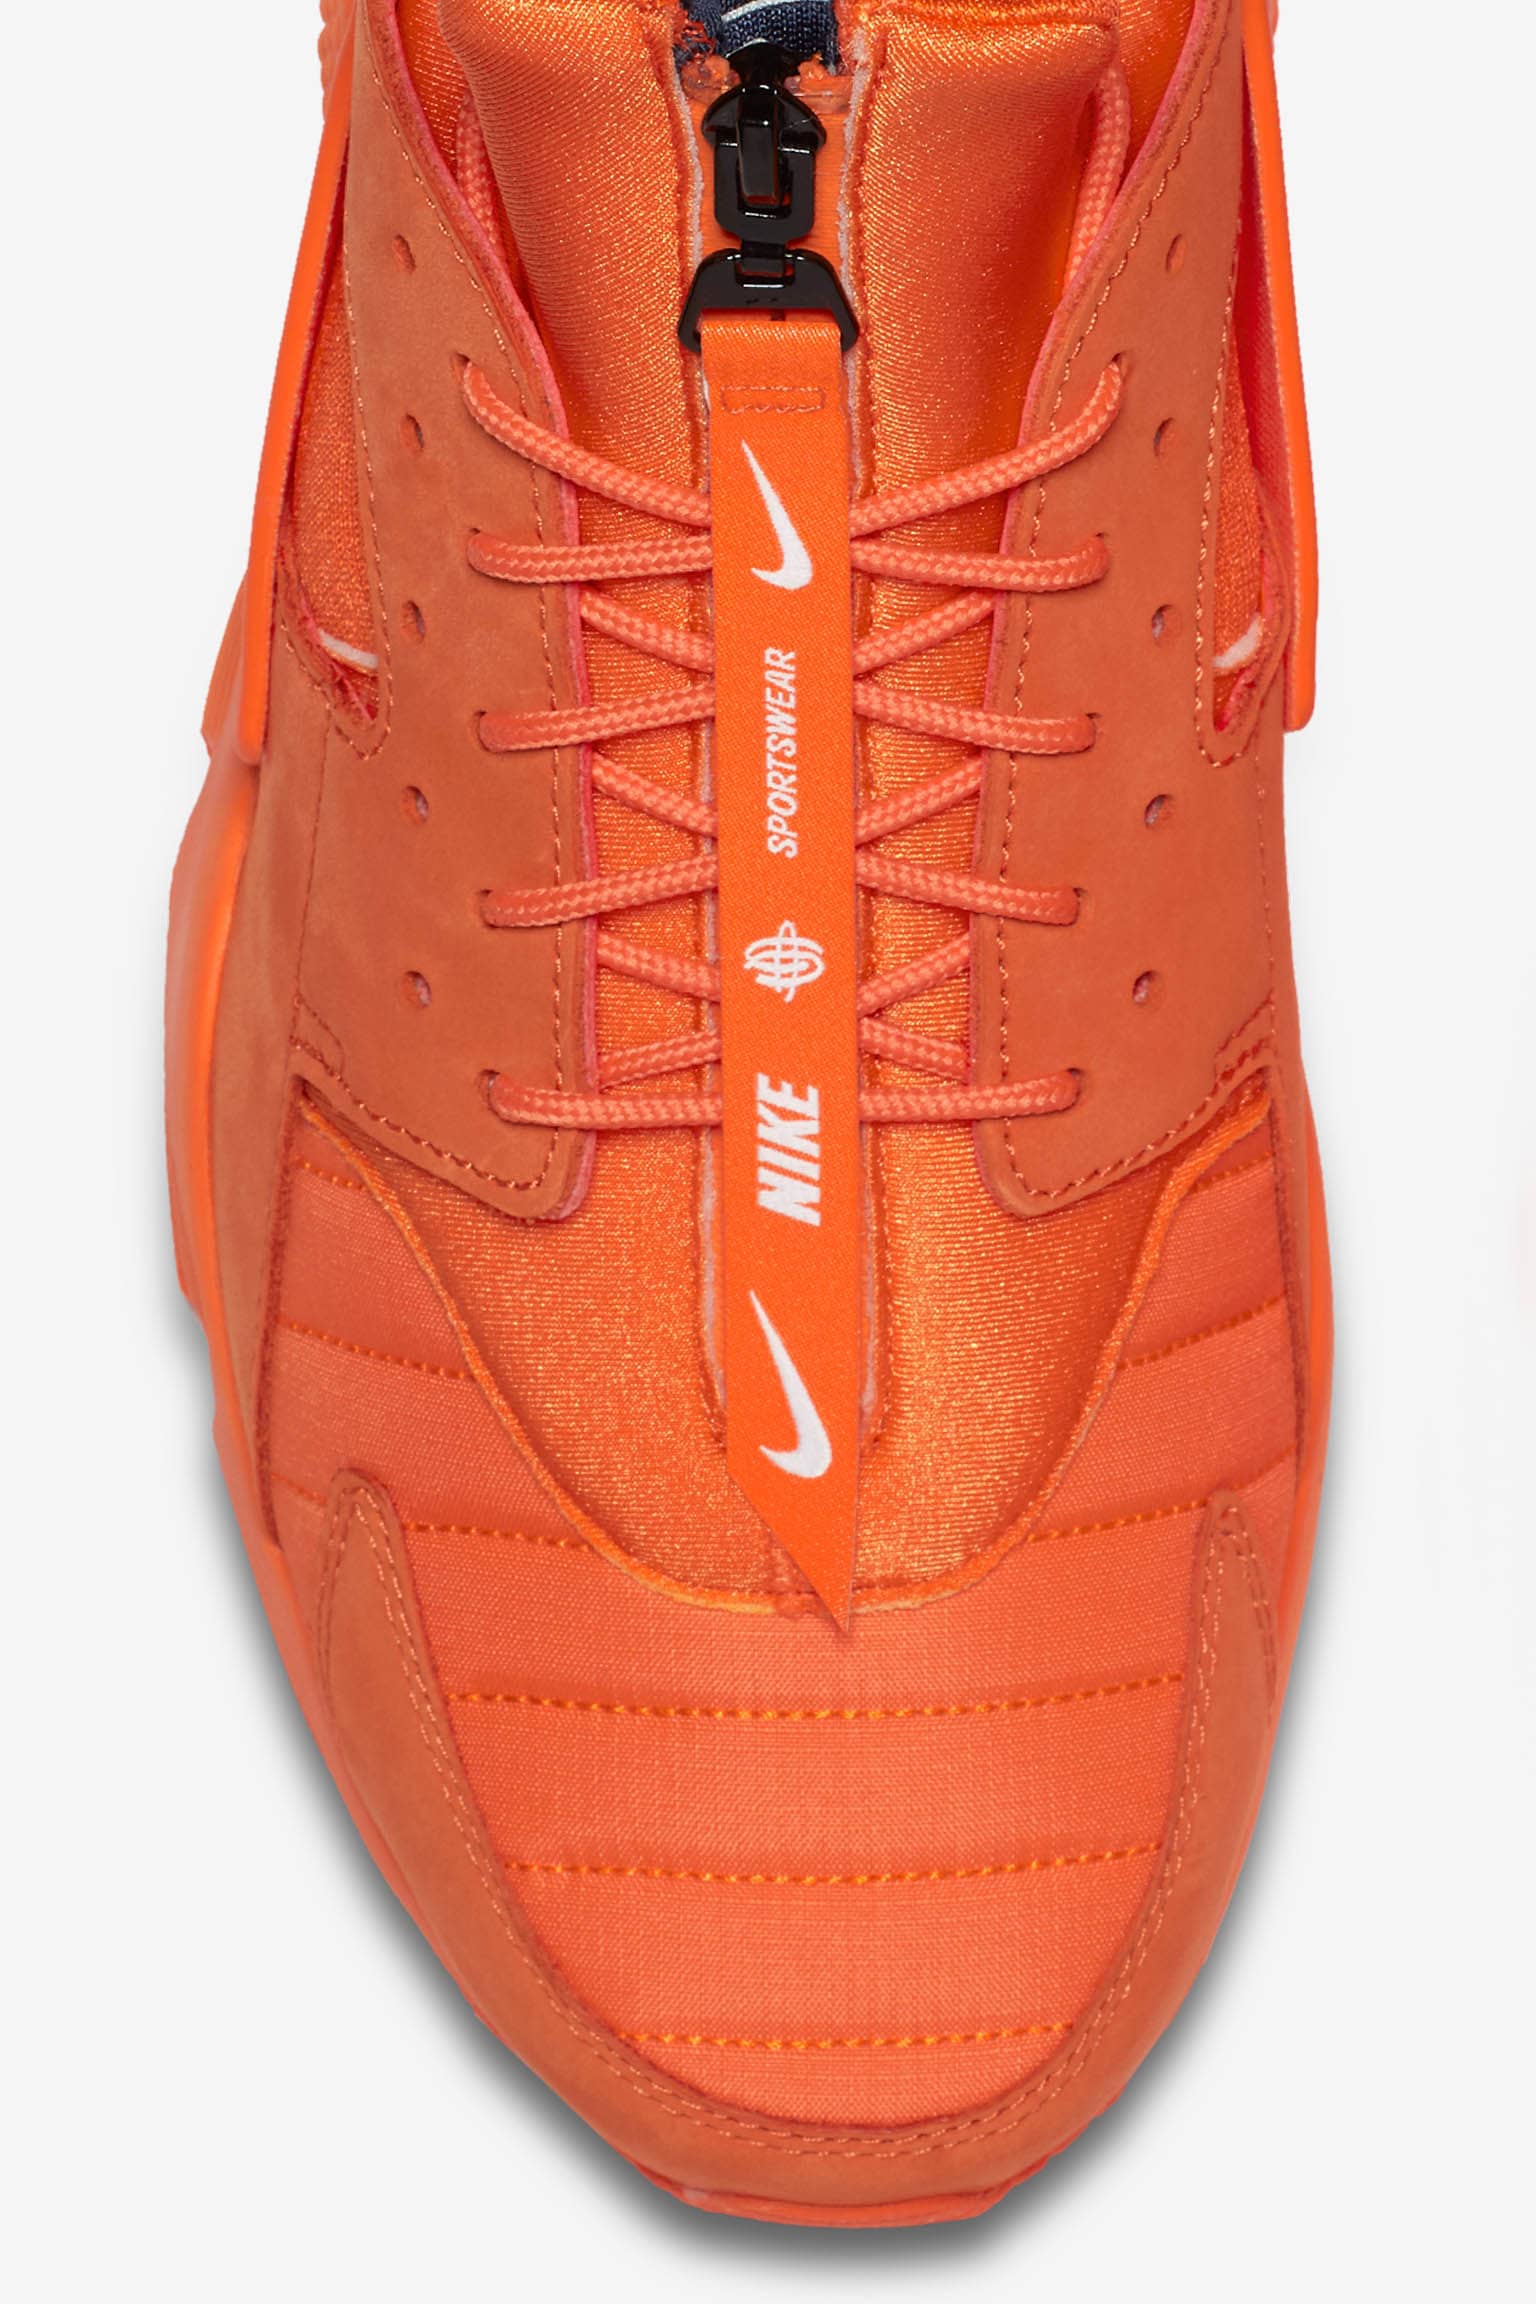 Nike Air Huarache Run 'Orange Blaze & Midnight Navy' Release Date